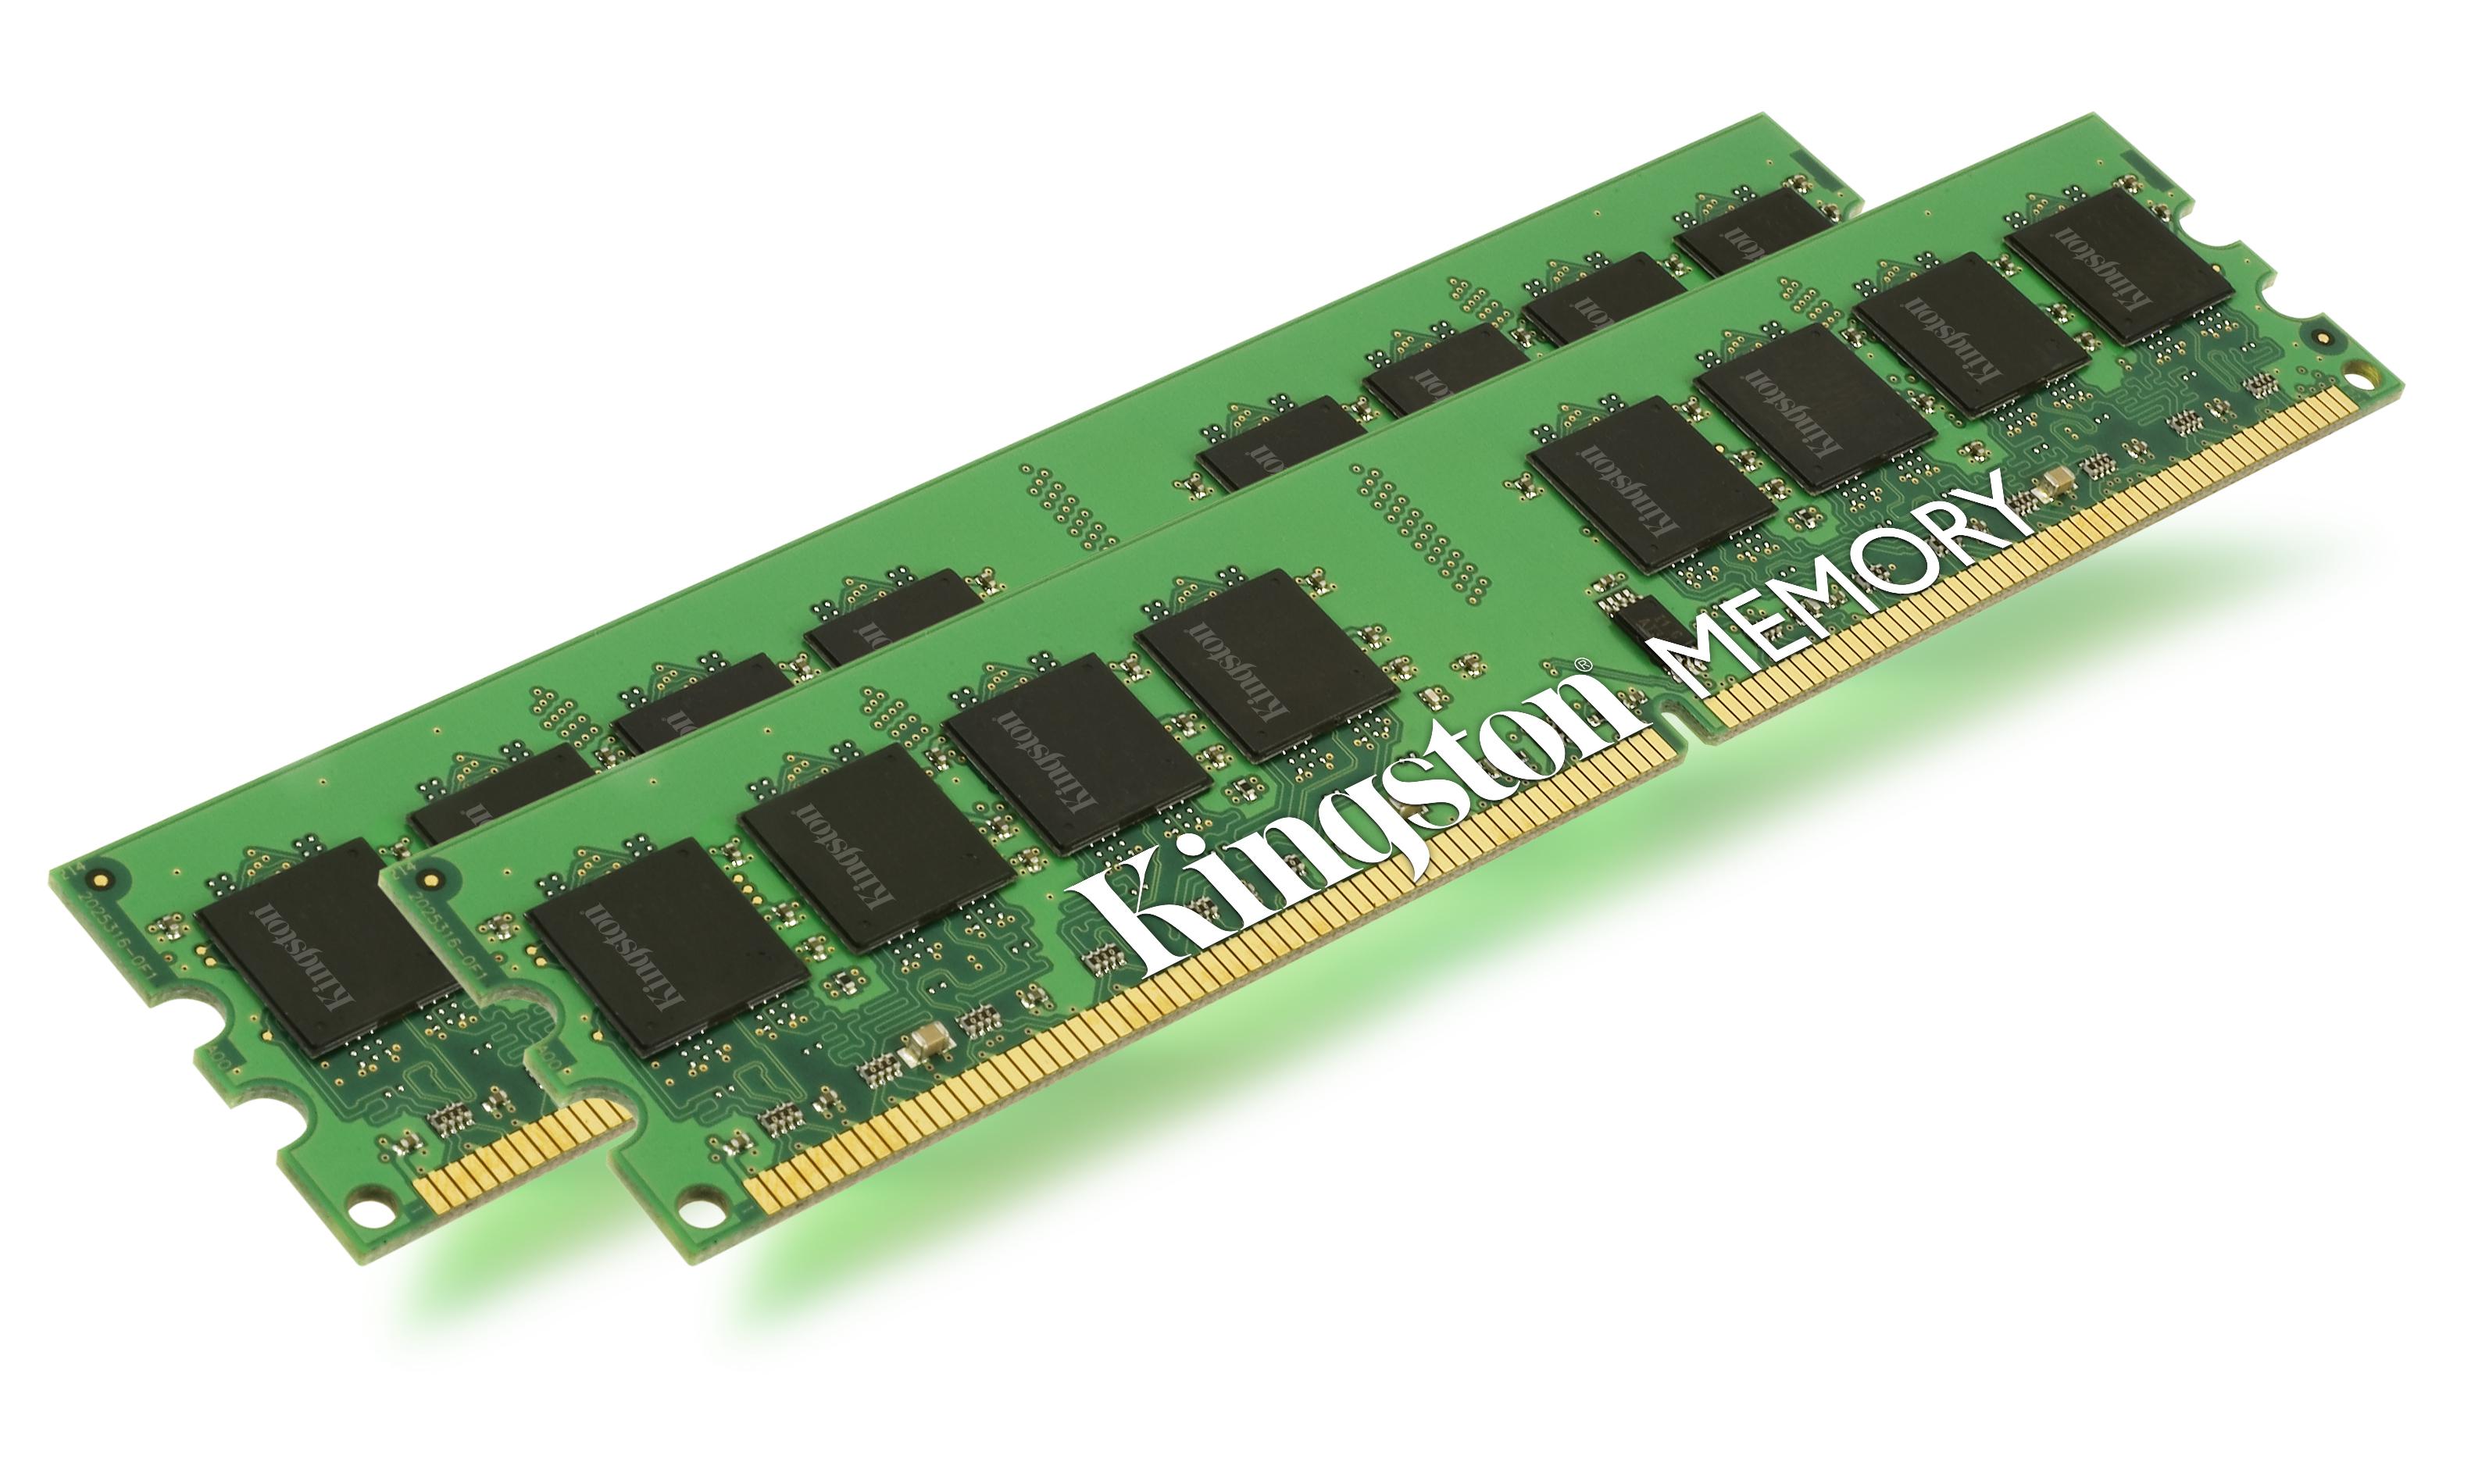 Foto Memoria Kingston 8gb 667mhz kit (chipkill) [KTM5780/8G] [074061710673